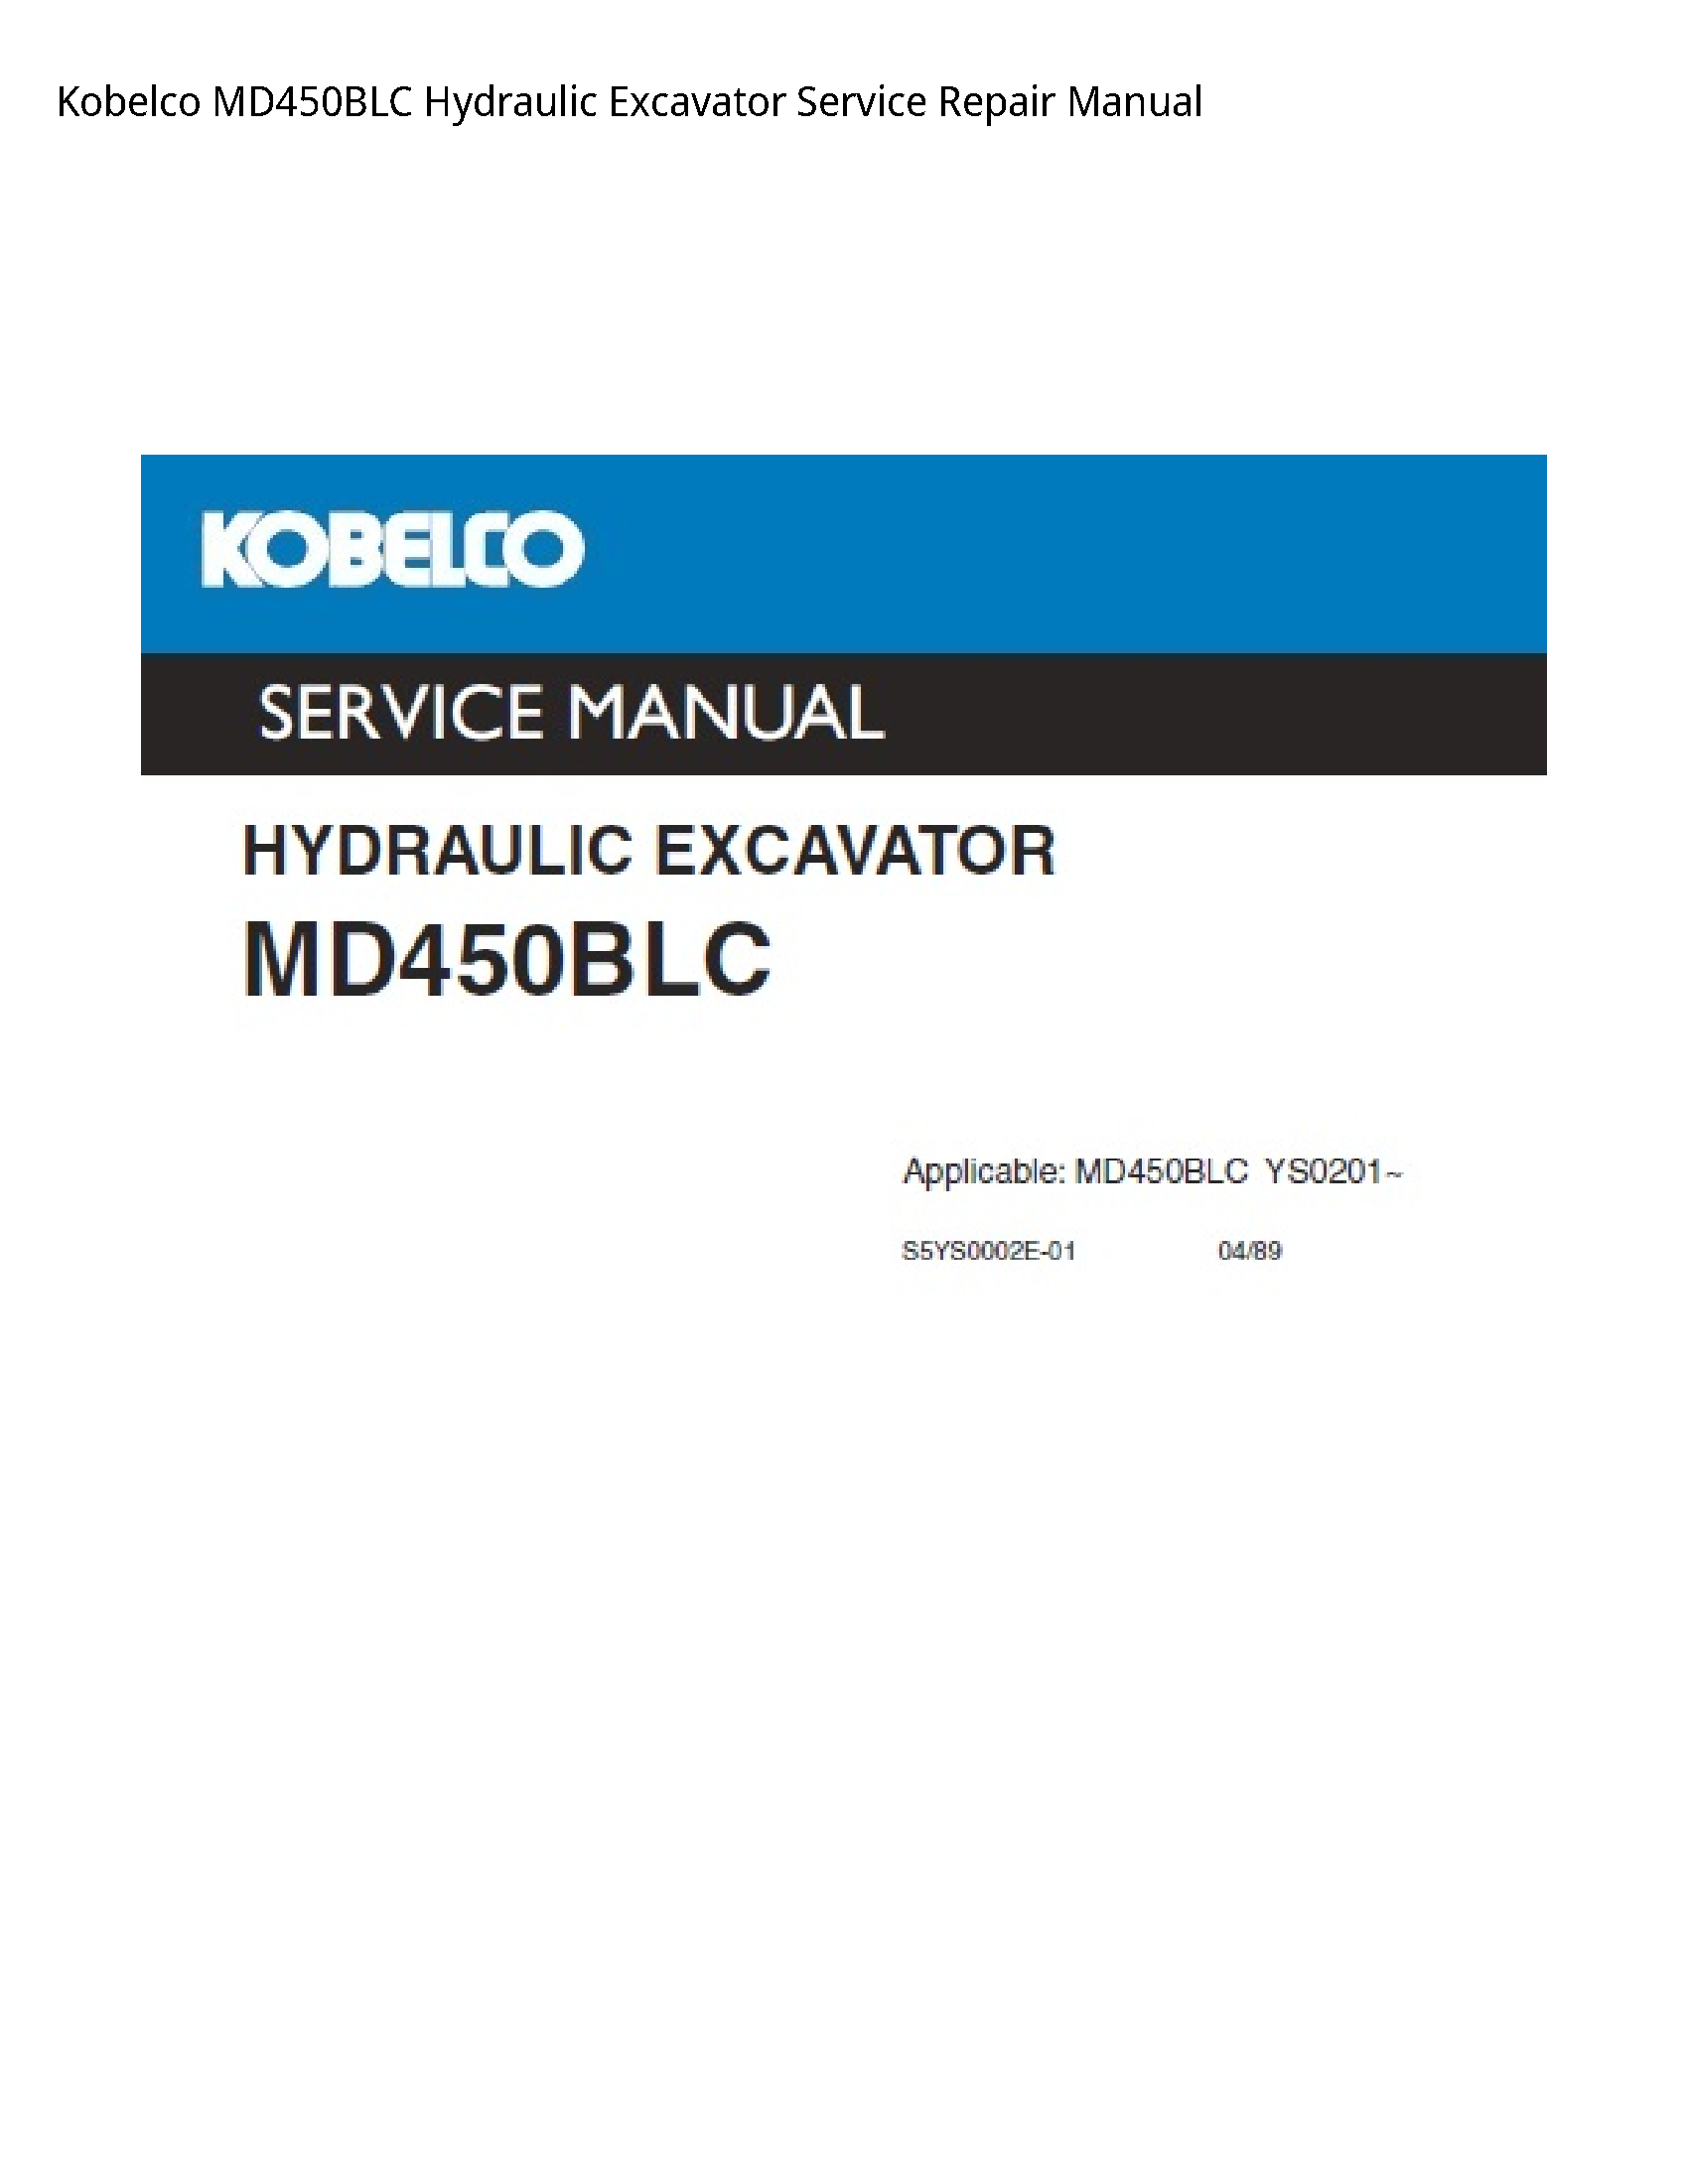 Kobelco MD450BLC Hydraulic Excavator manual